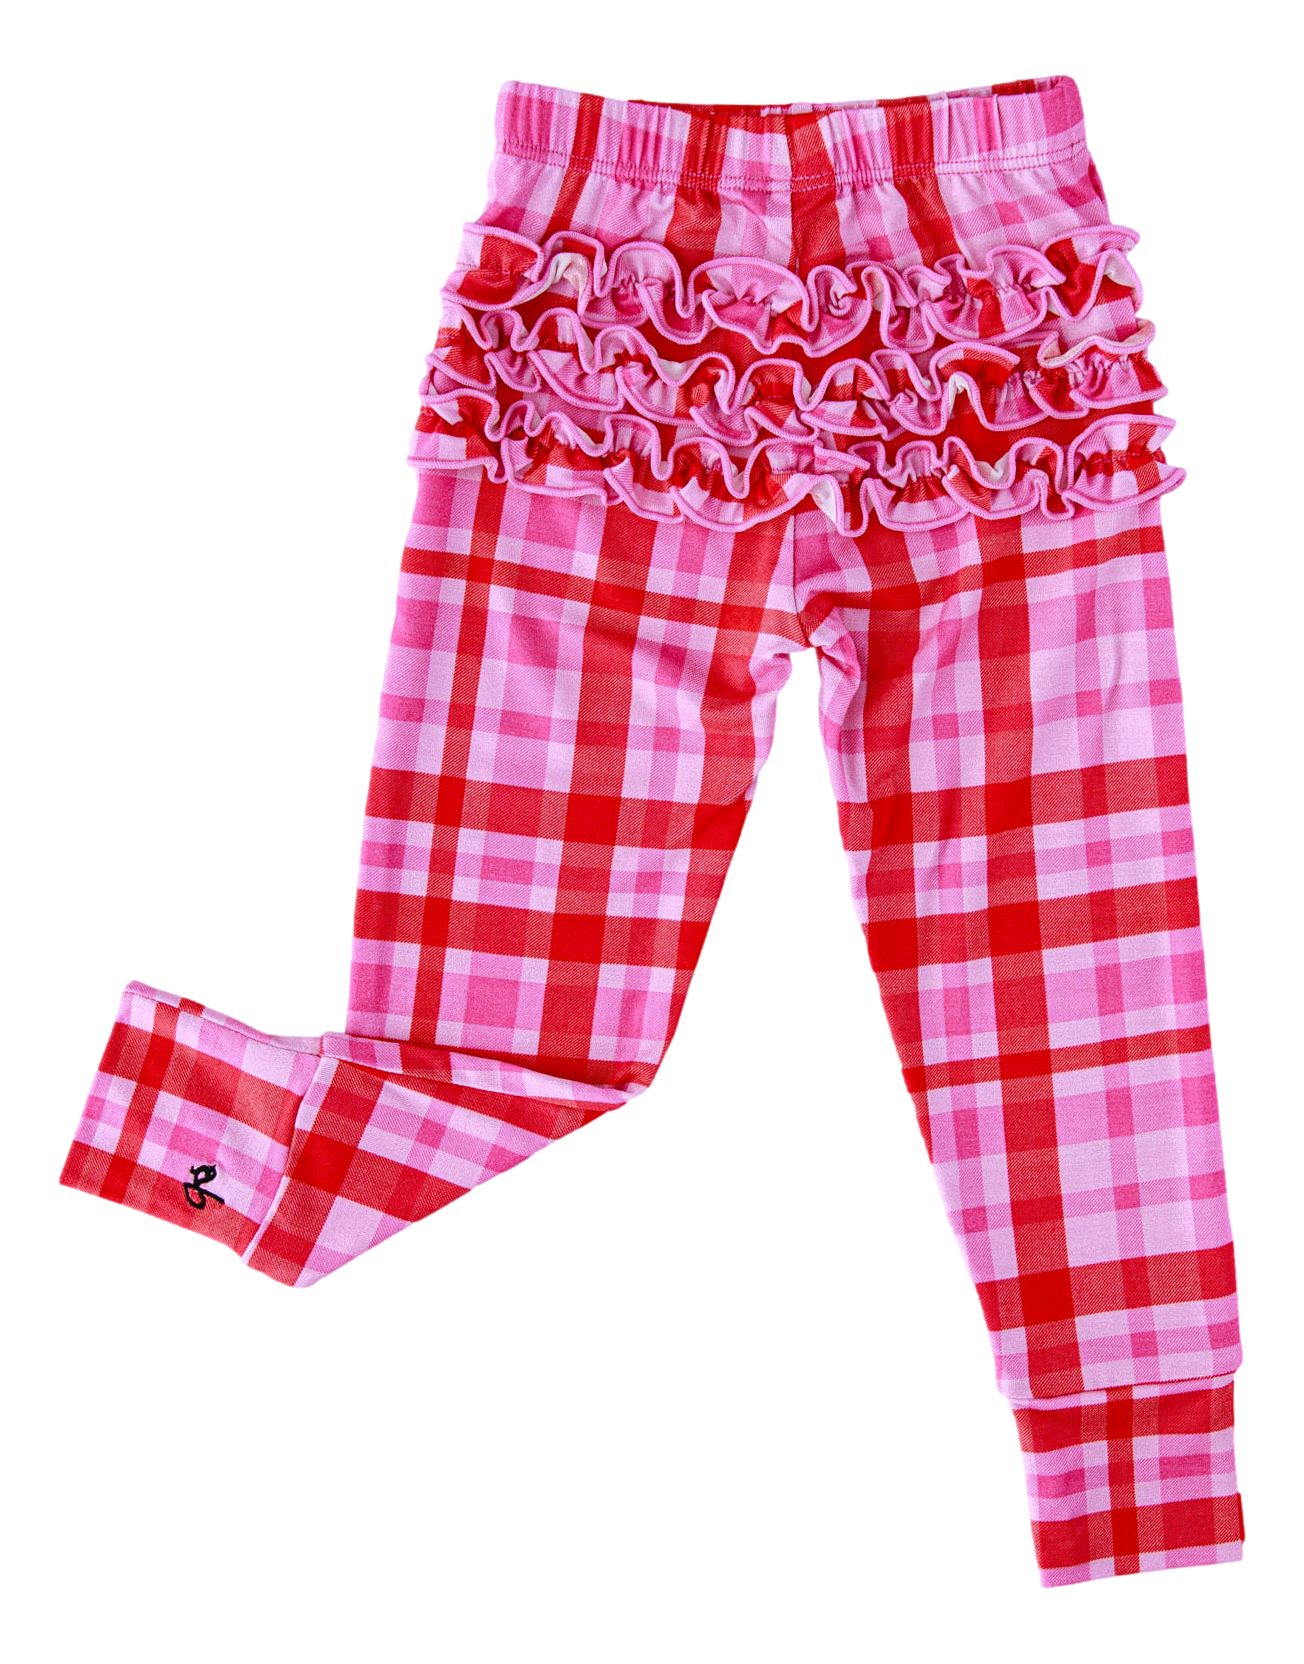 pink/red plaid leggings